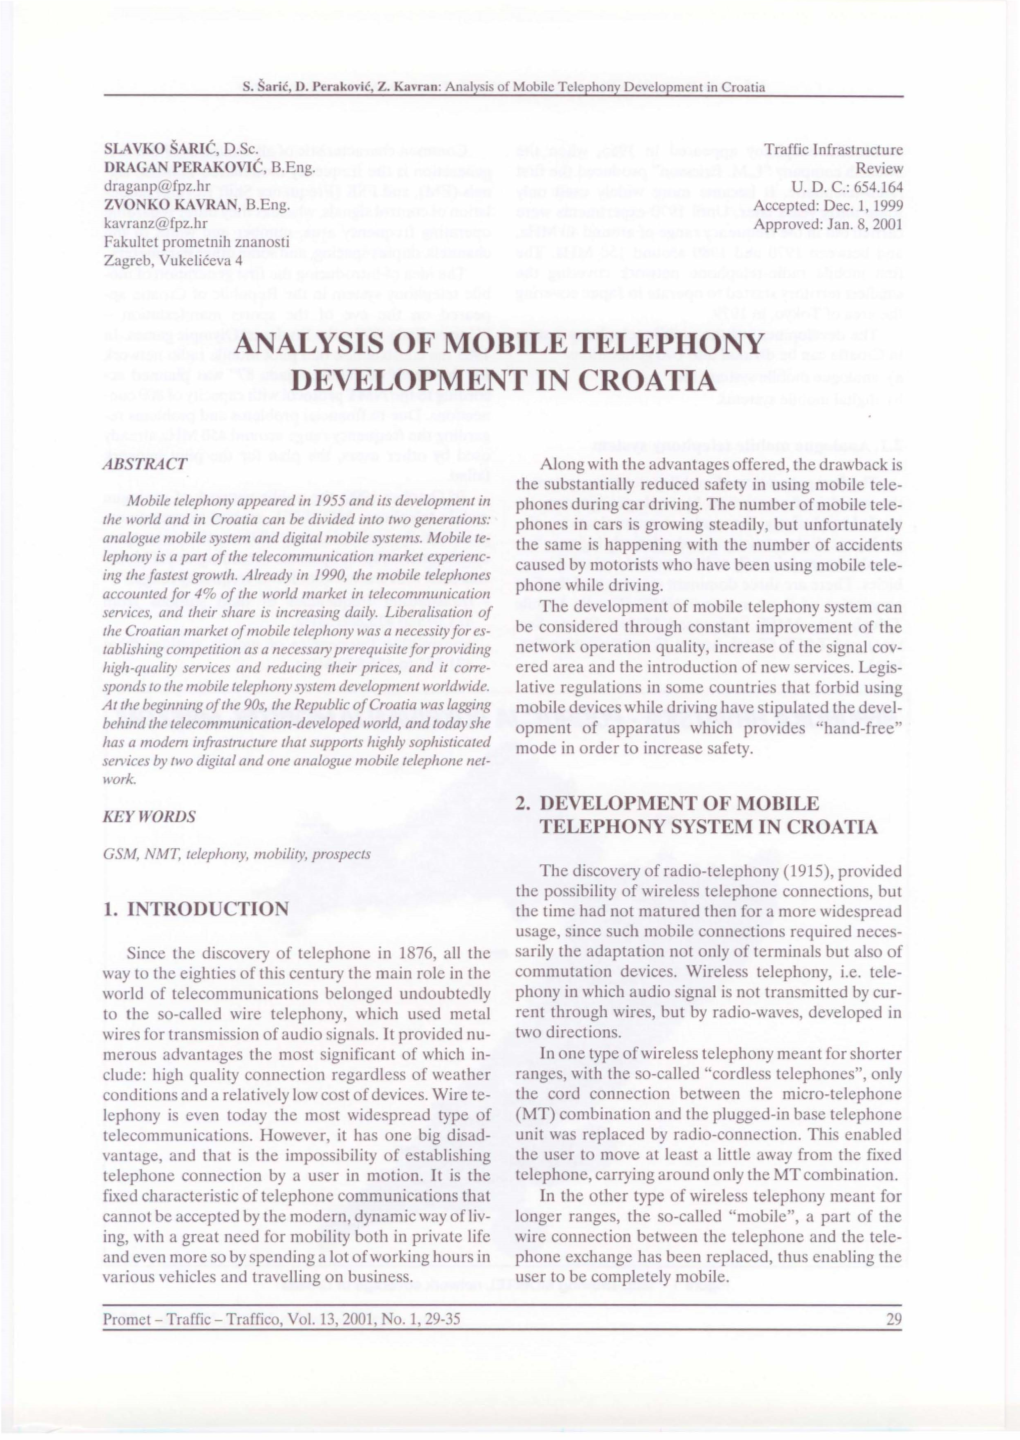 Analysis of Mobile Telephony Development in Croatia